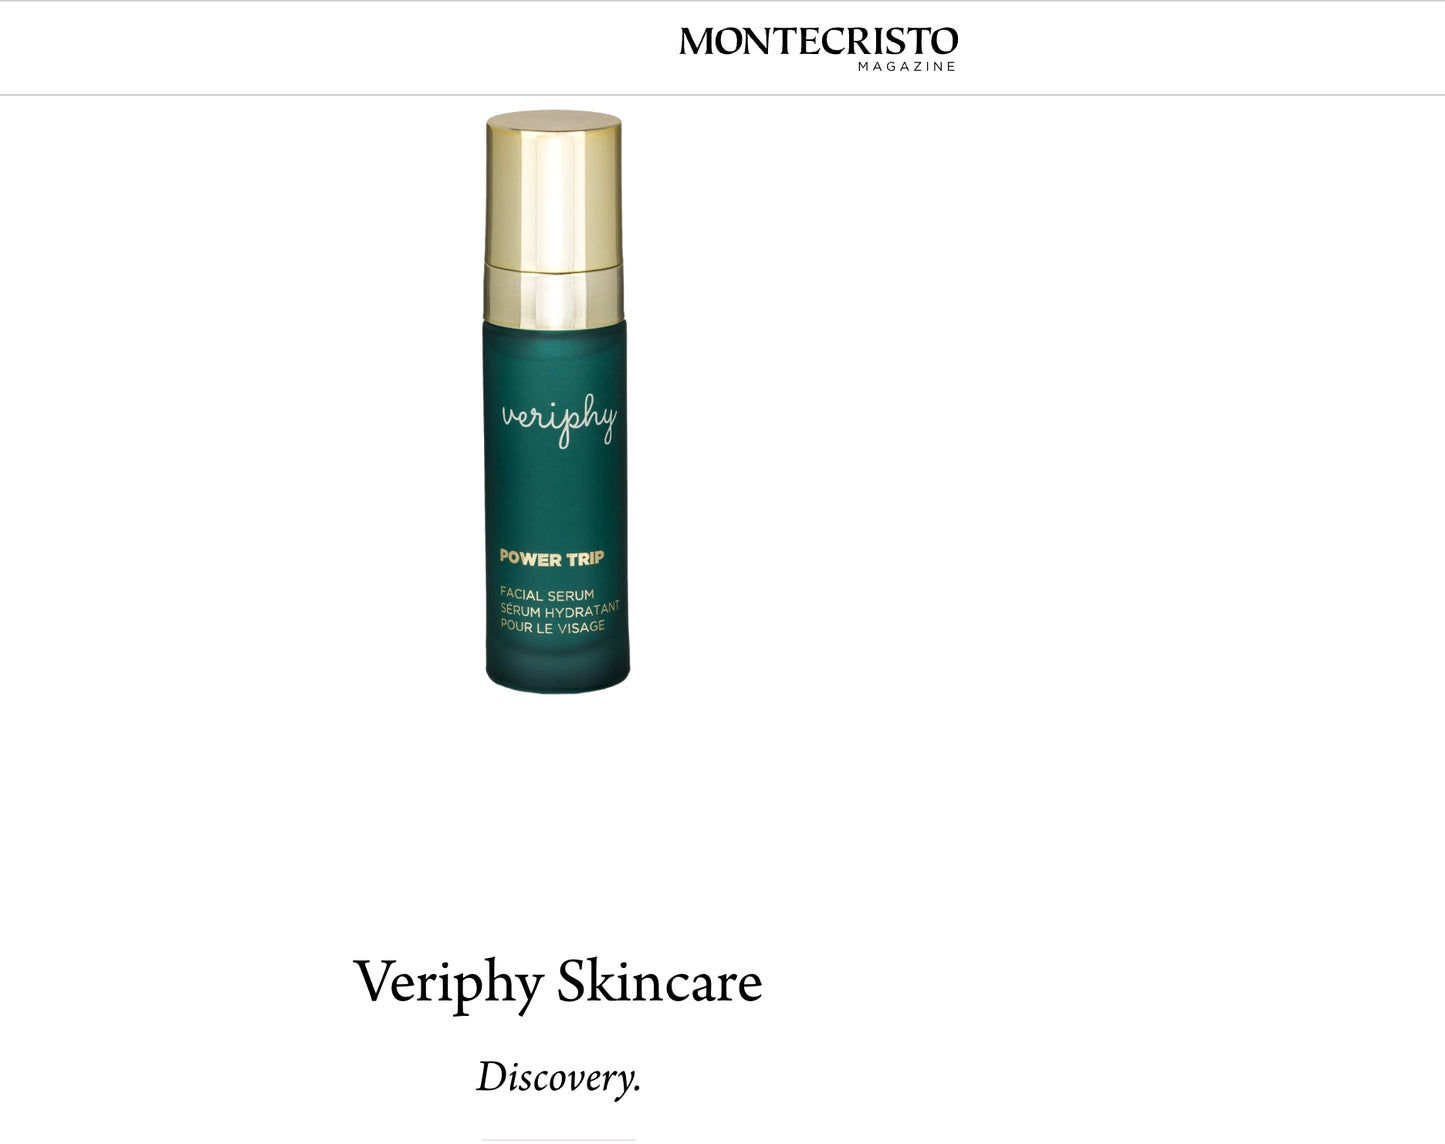 Veriphy Skincare featured in Montecristo Magazine